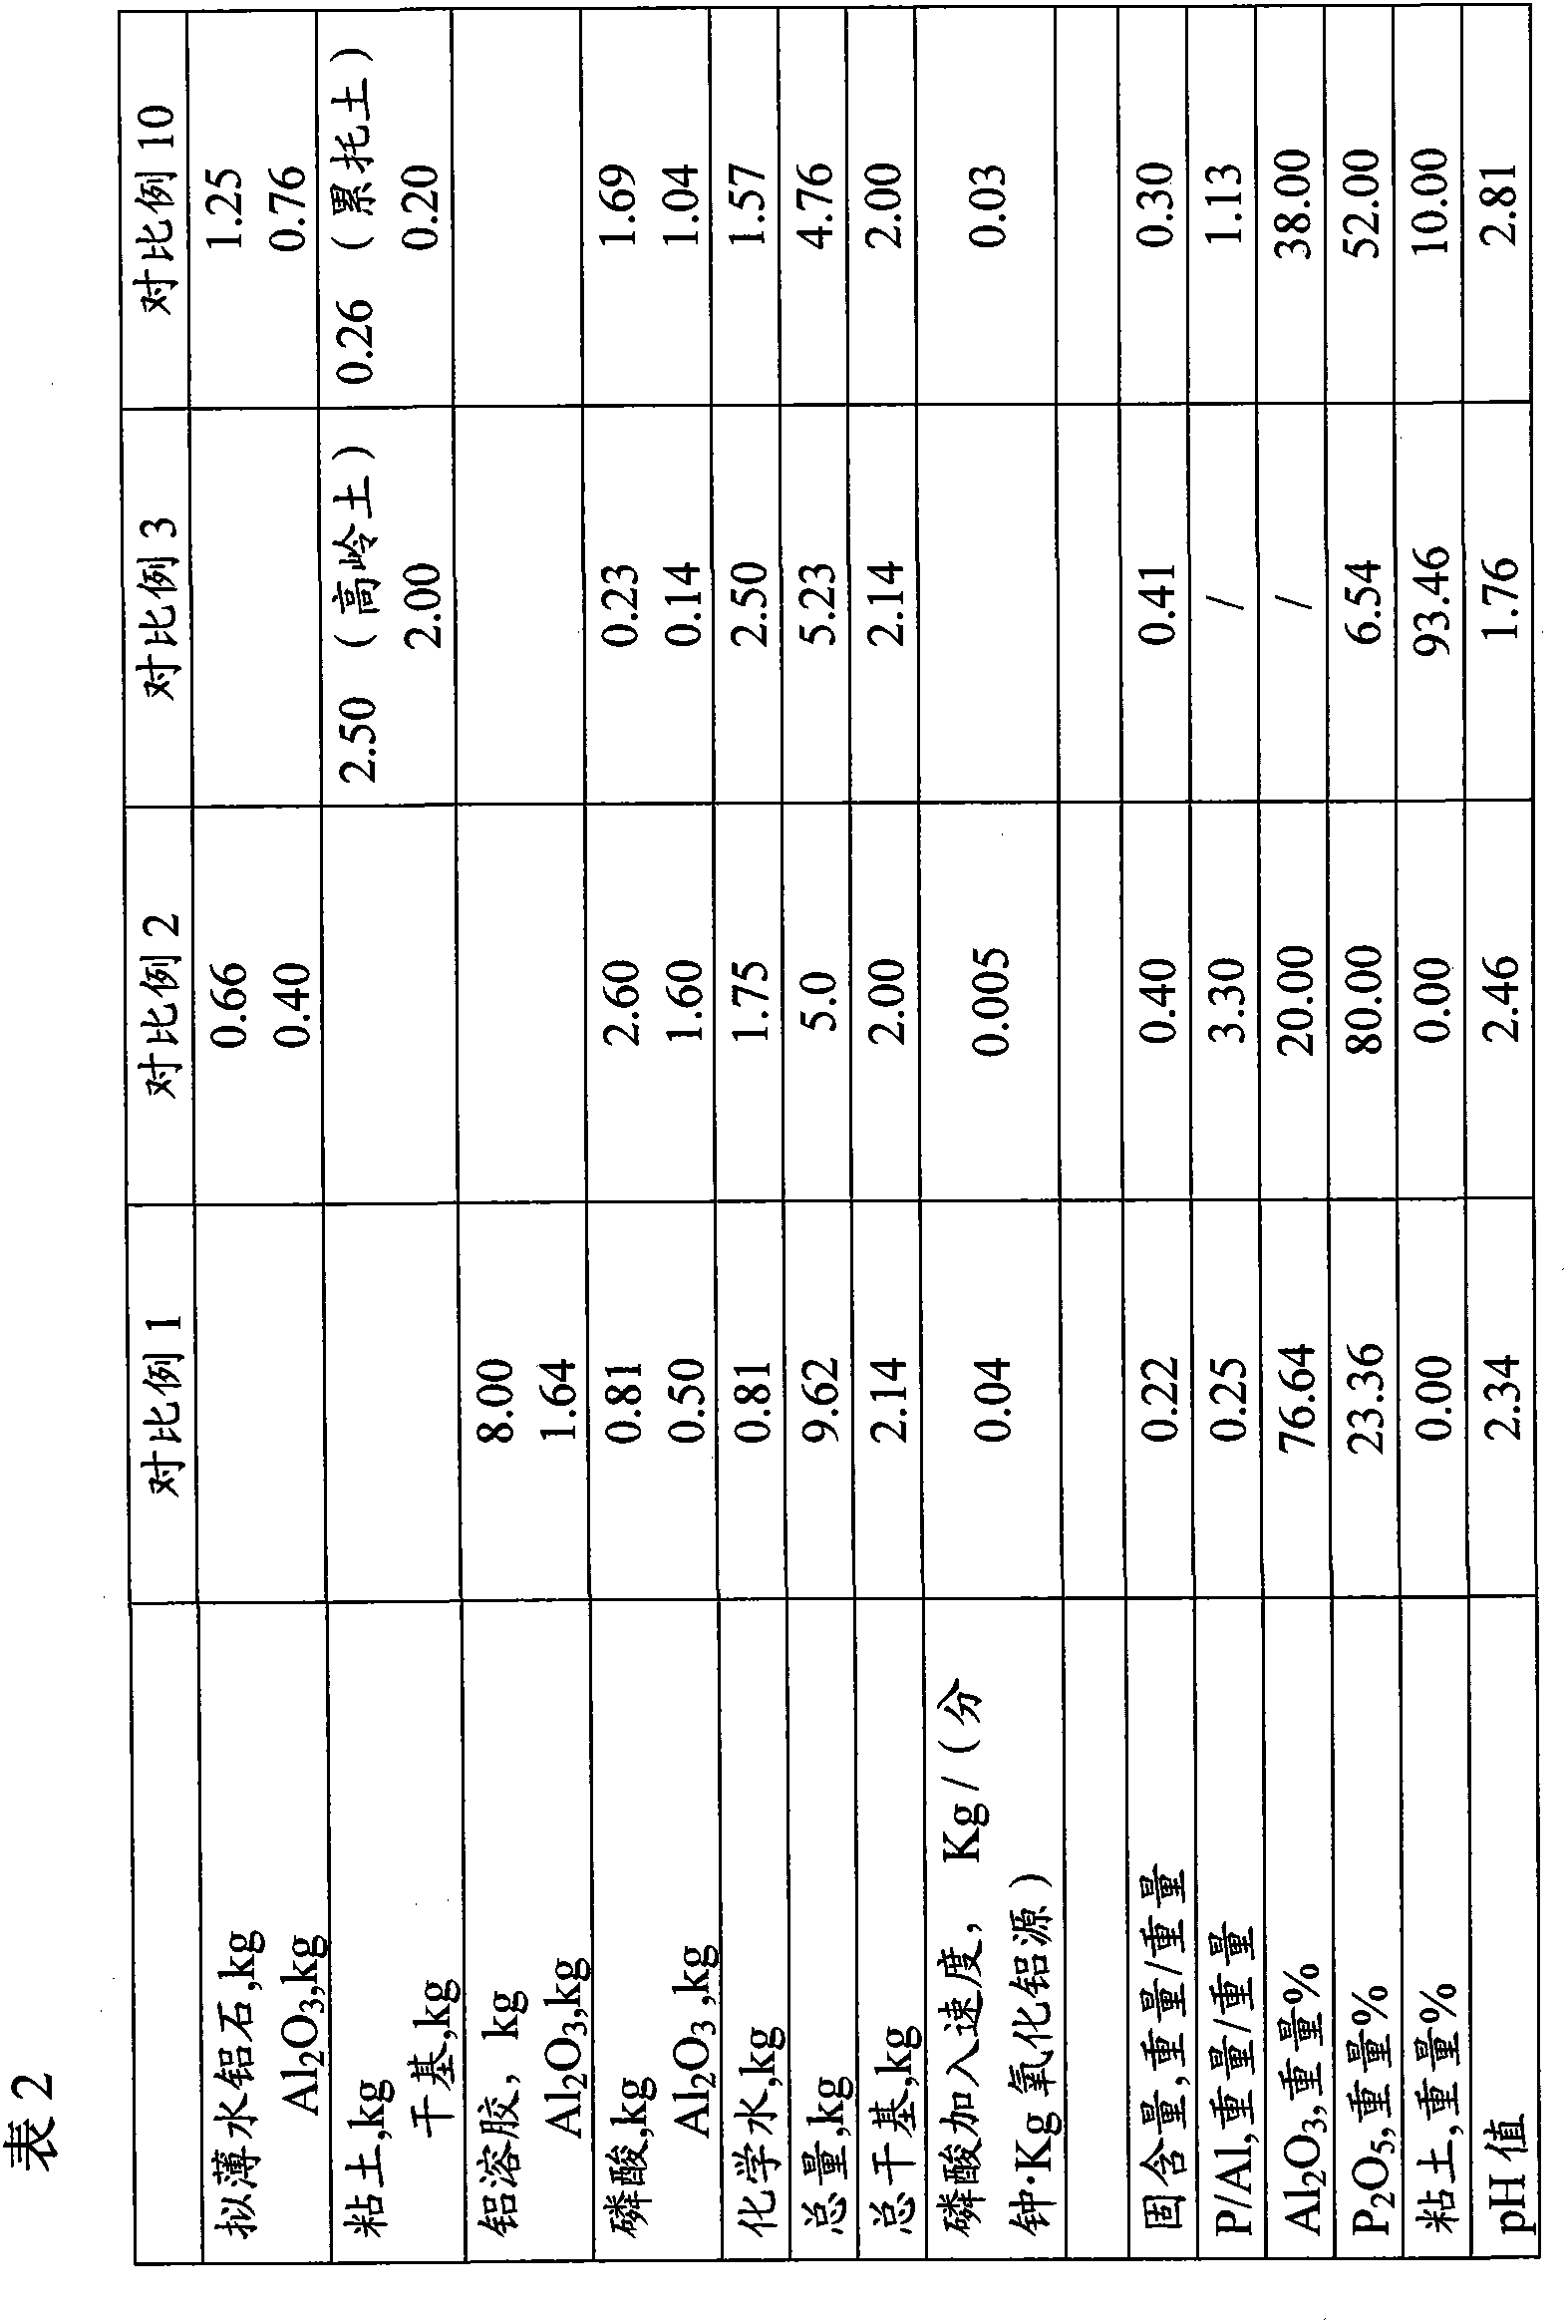 Inorganic binder containing phosphorus and aluminum compounds